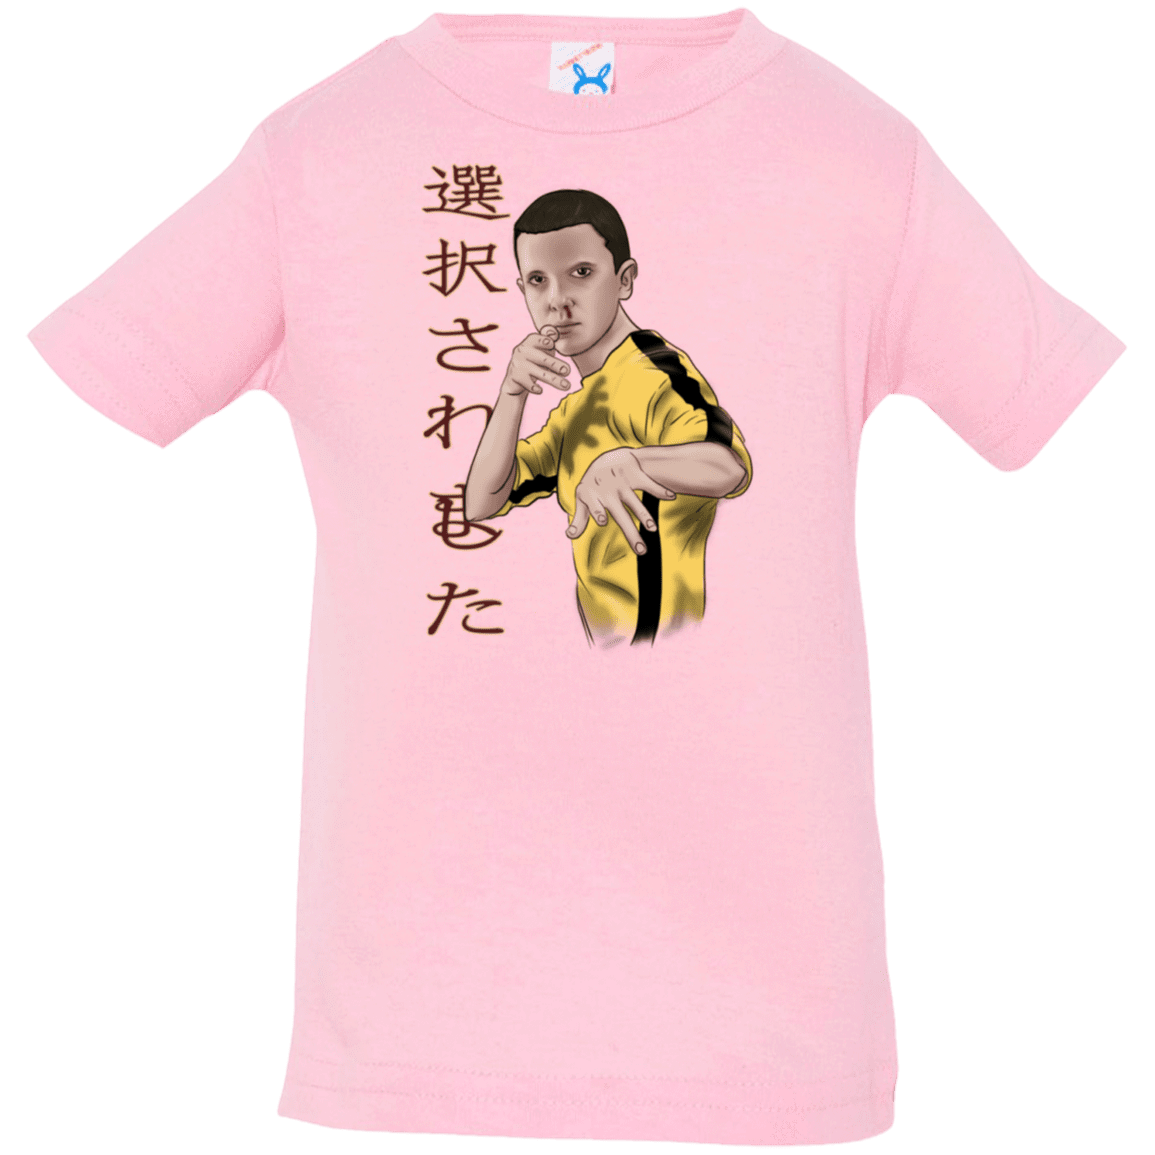 T-Shirts Pink / 6 Months ELEEven Infant Premium T-Shirt